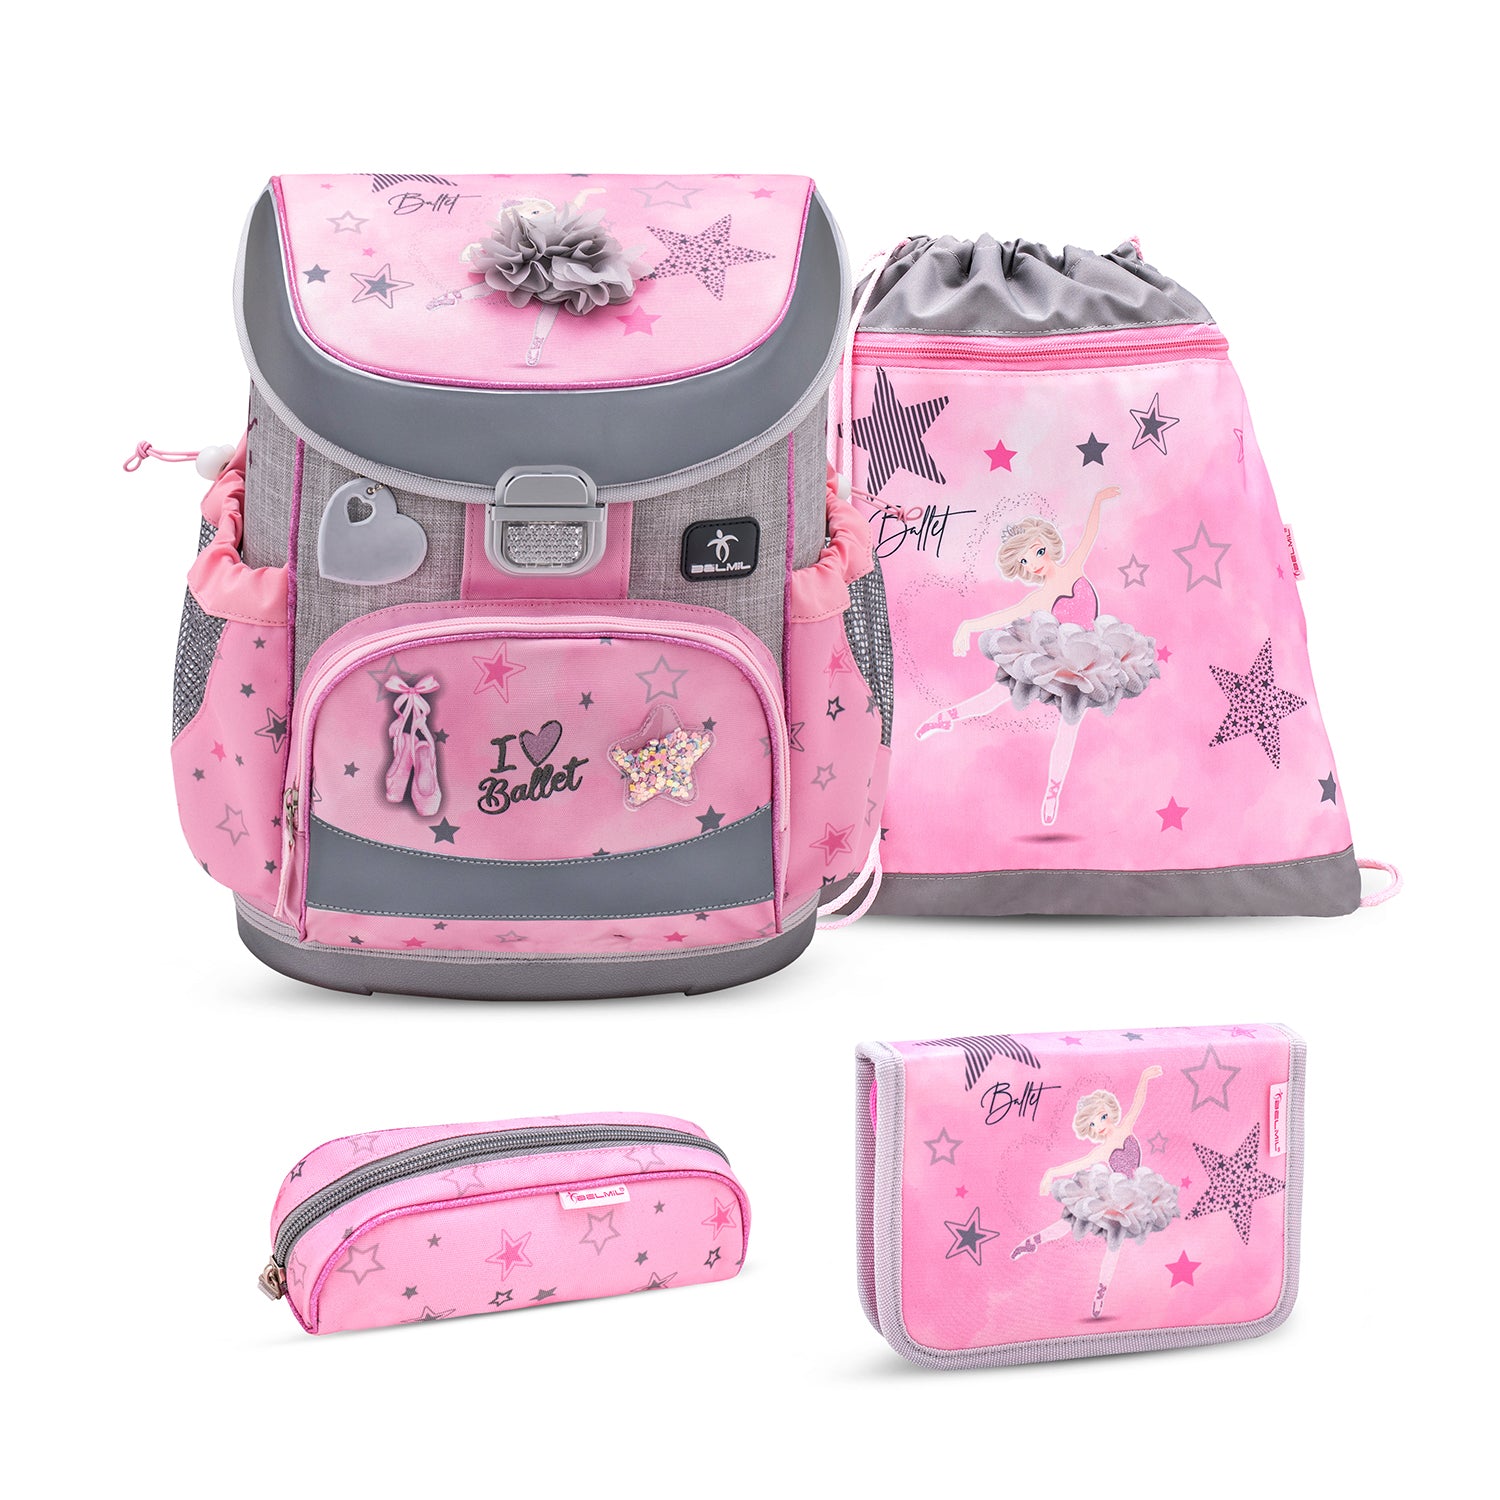 Mini-Fit Ballet Light Pink schoolbag set 5 pcs with GRATIS keychain